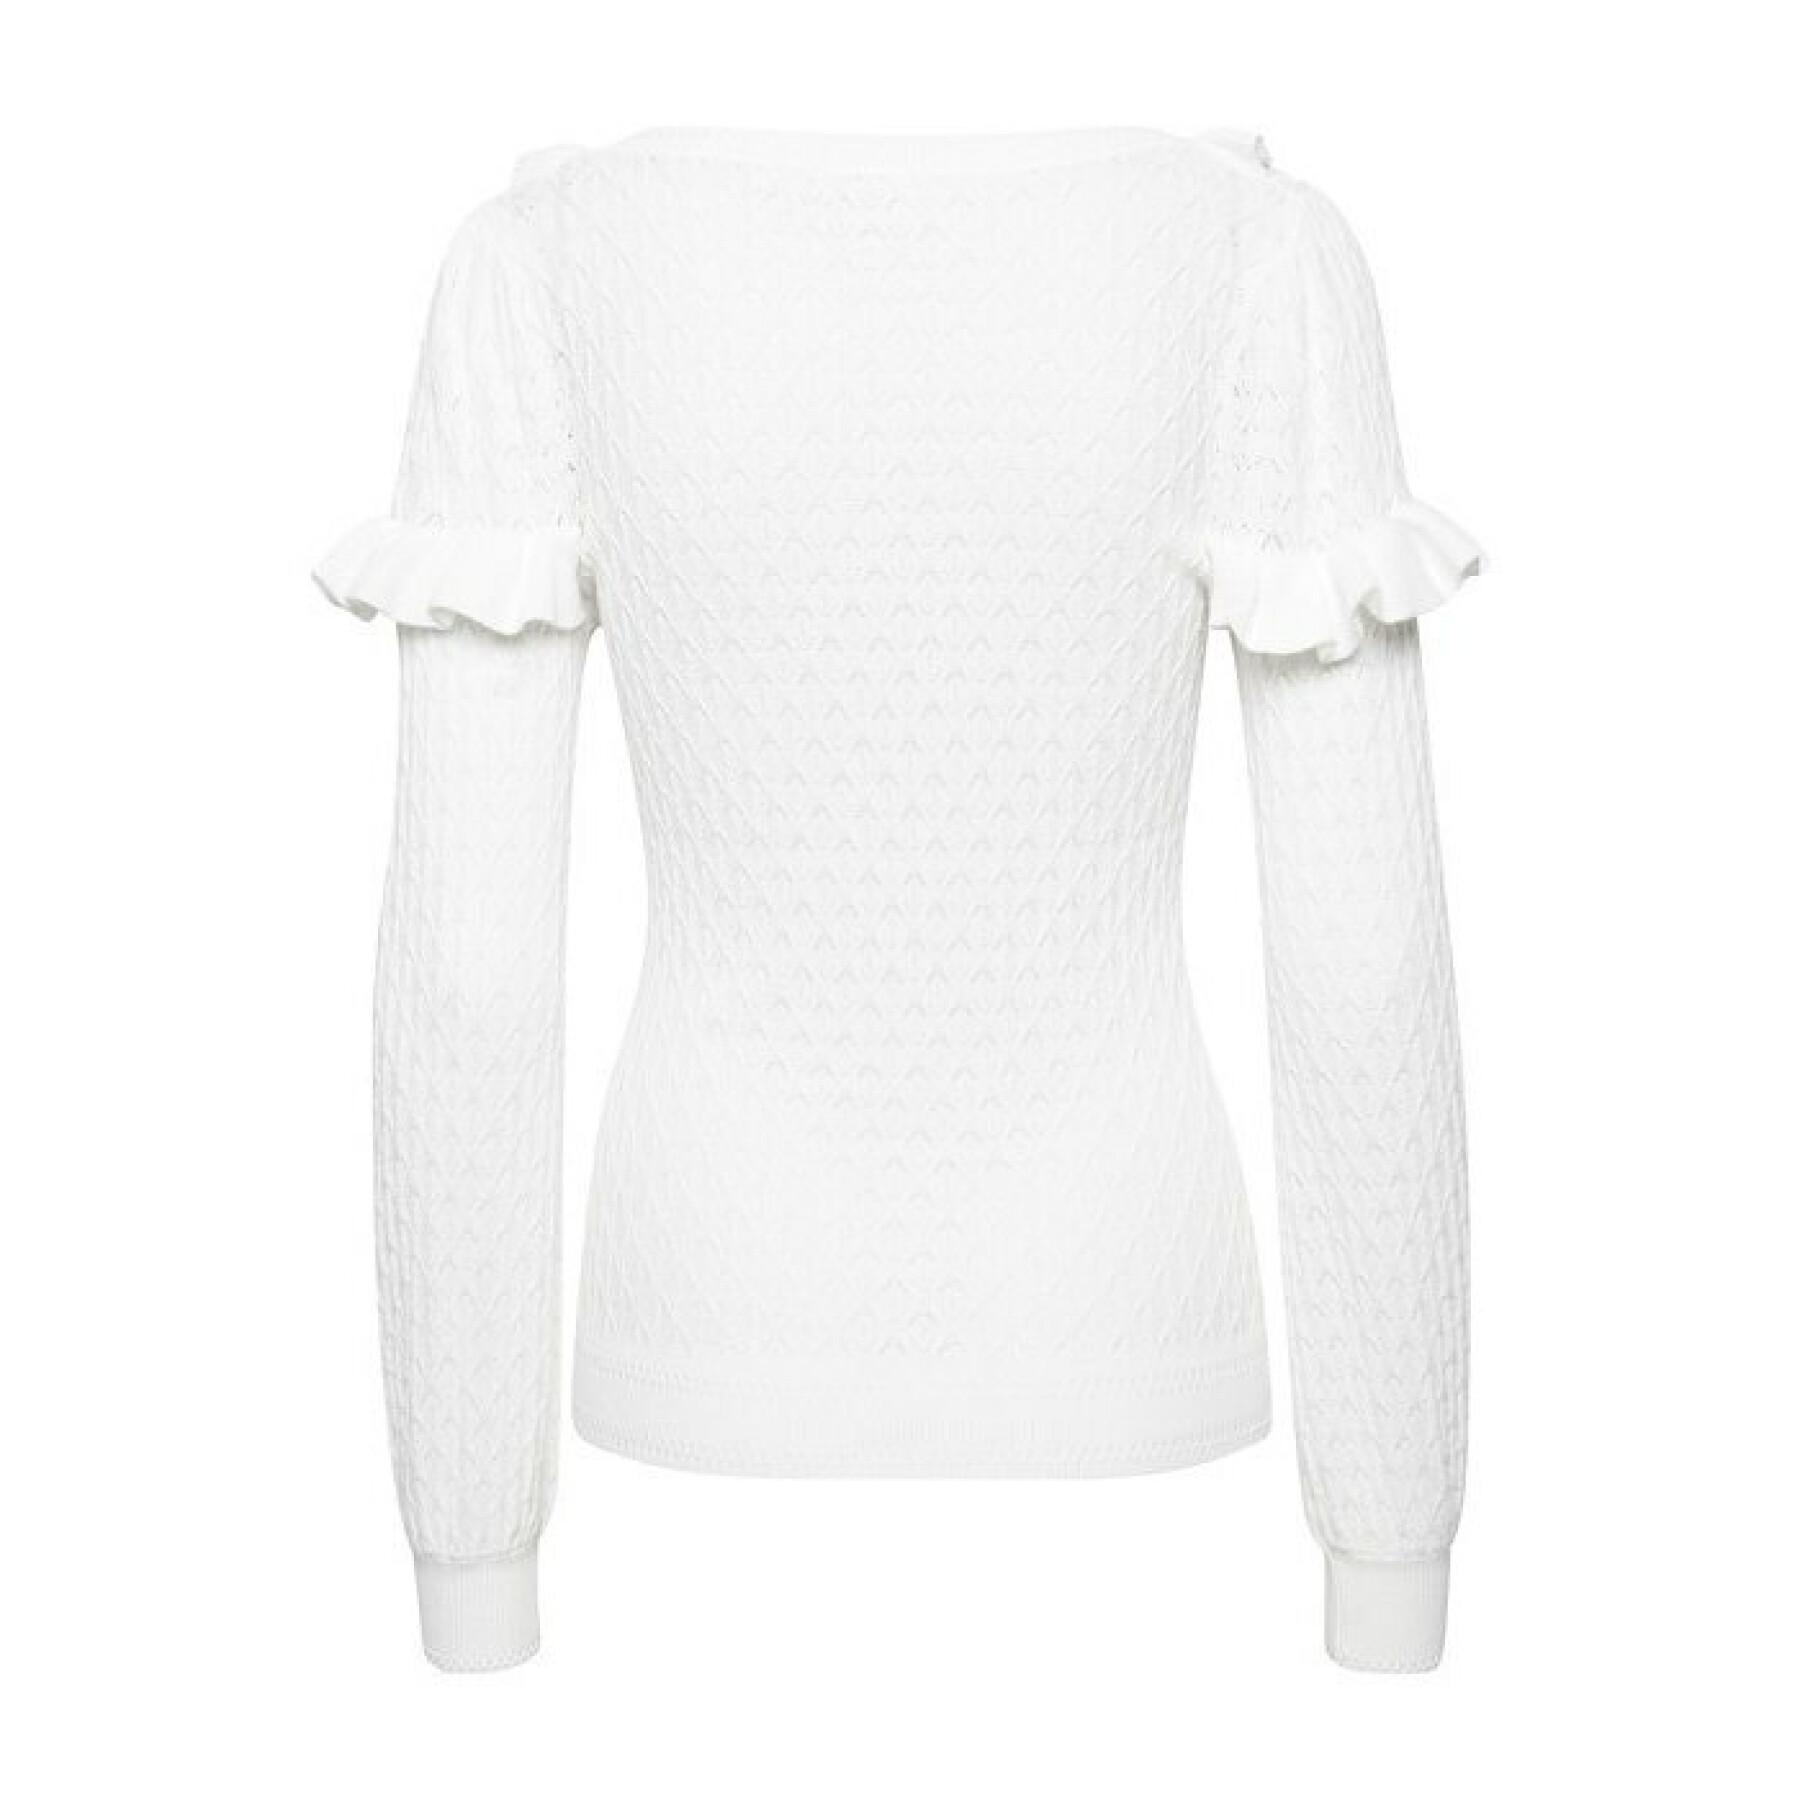 Women's sweater-blouse Atelier Rêve Irfantino